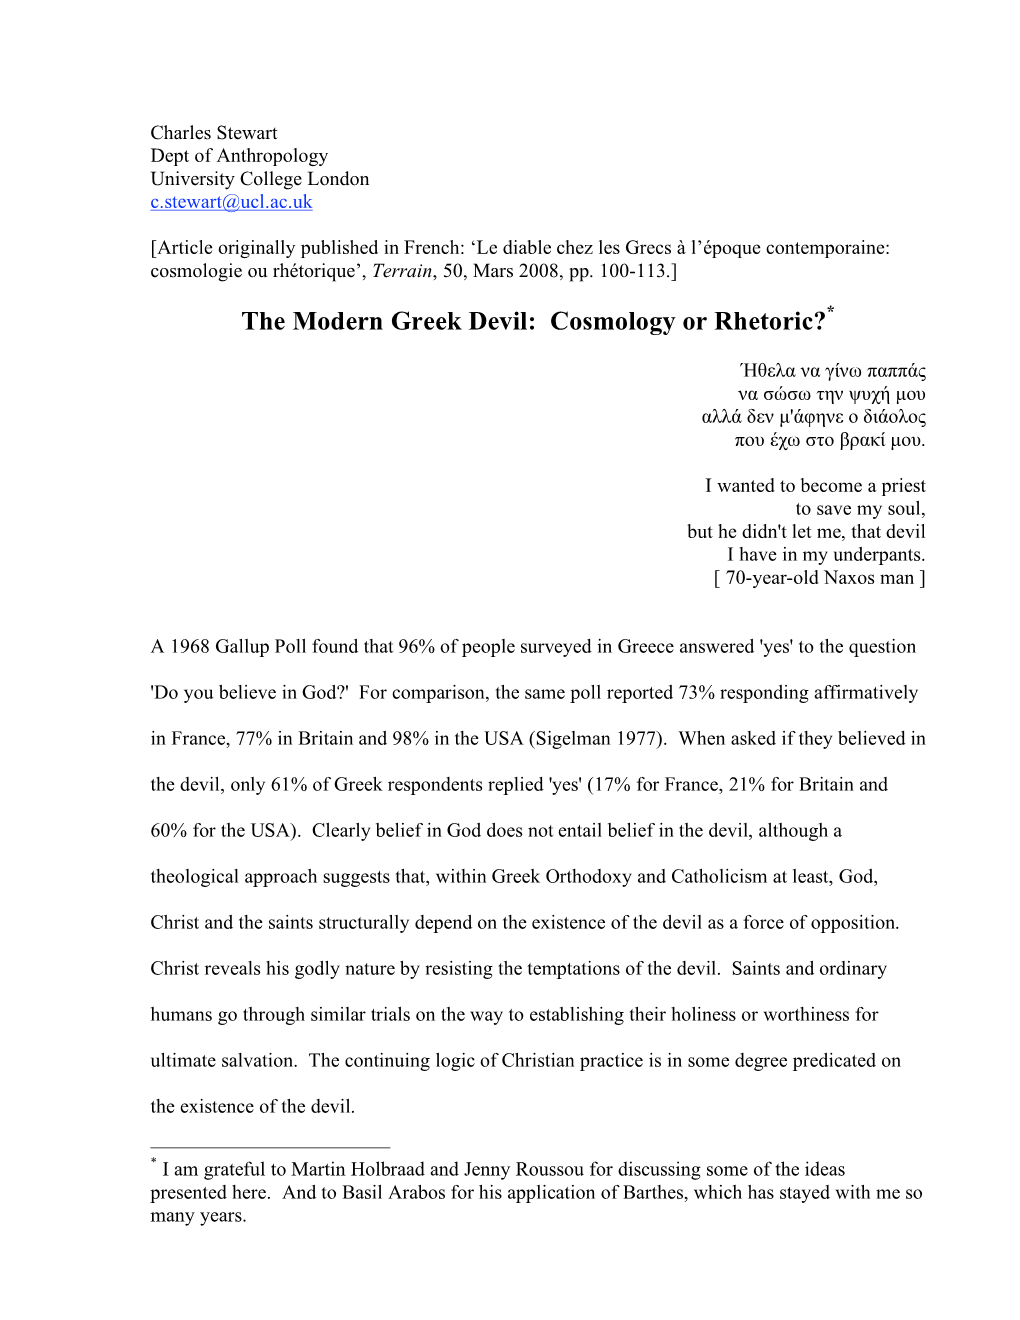 The Modern Greek Devil: Cosmology Or Rhetoric?*